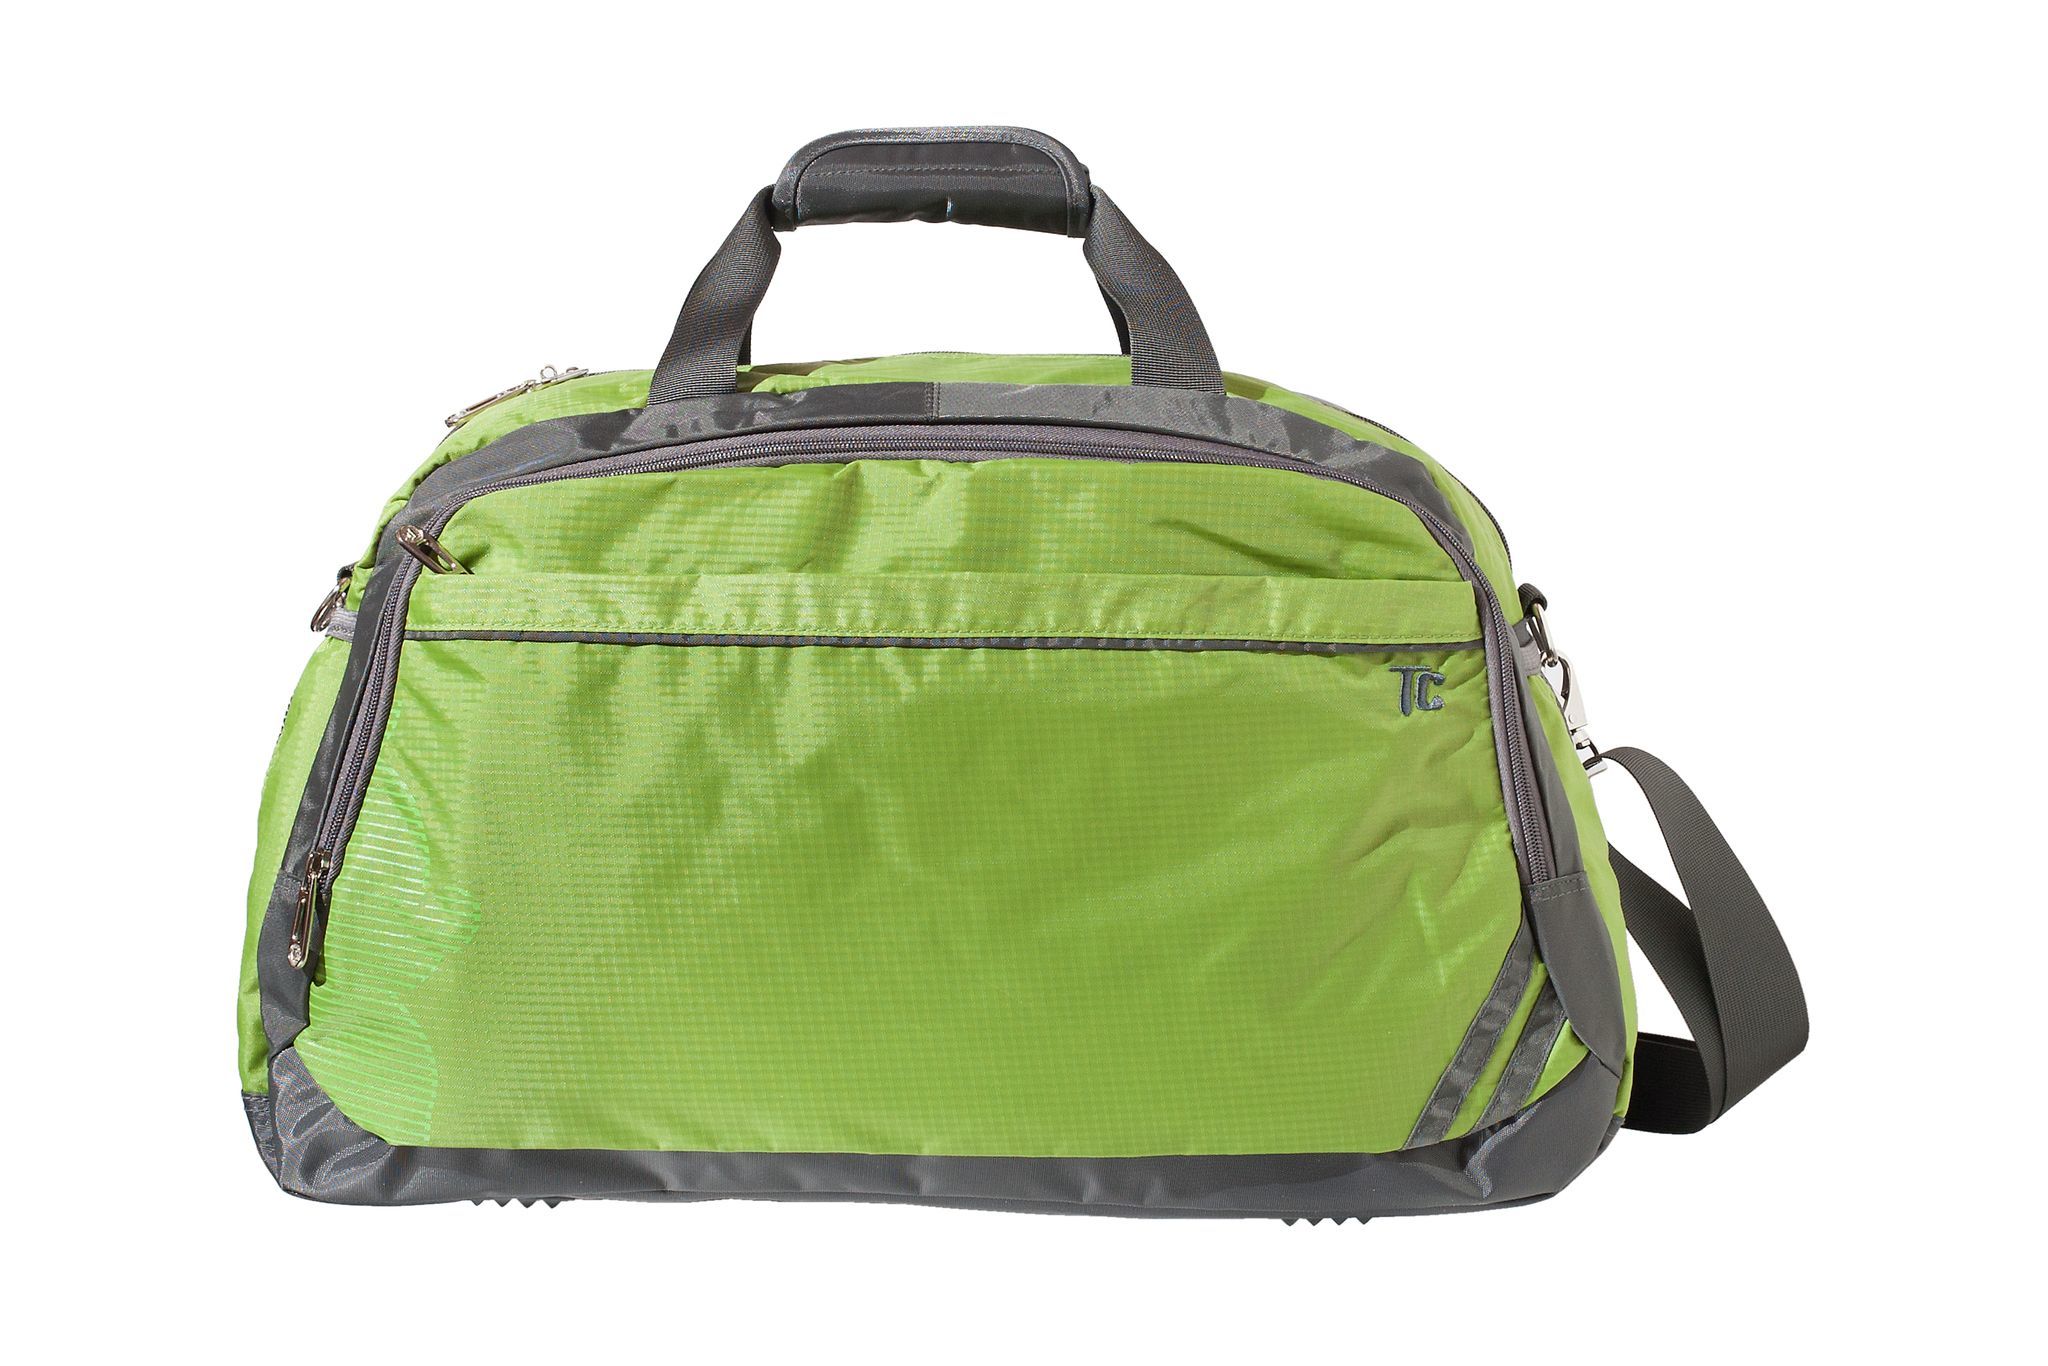 Сумка спортивная Travel Case 55 см (31 сумка спортивная, Салатовый)